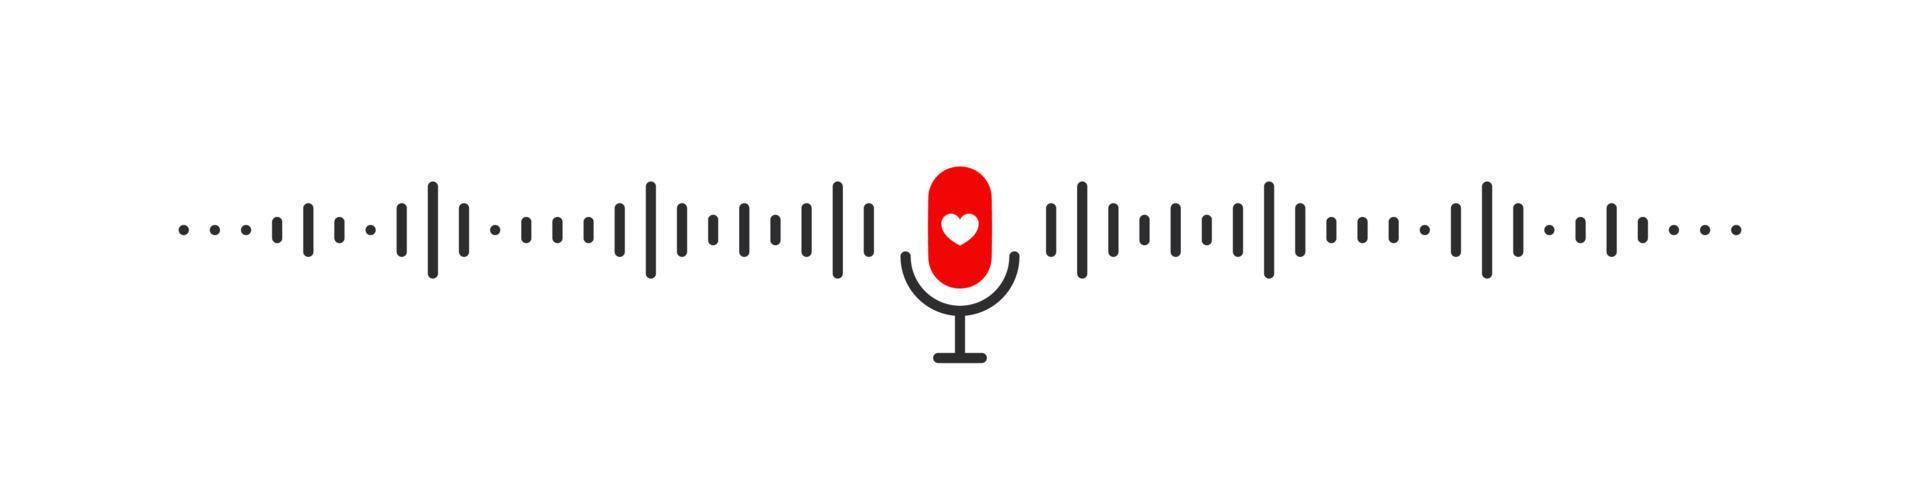 Mikrofon-Symbol. Podcast-Logo. Mikrofonsymbol mit Schallwellen. Vektorsymbole vektor